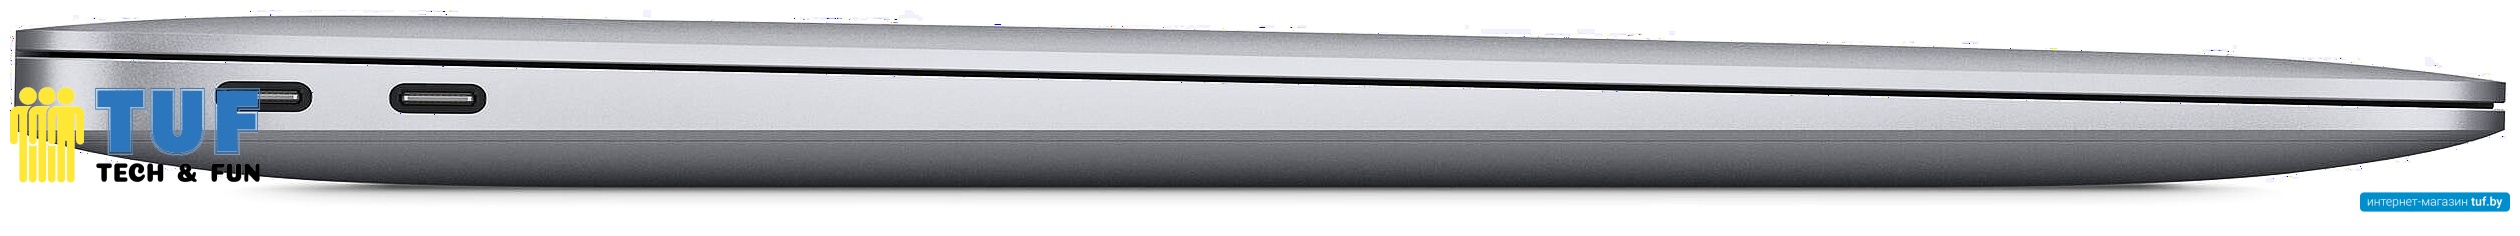 Ноутбук Apple Macbook Air 13" M1 2020 MGN73